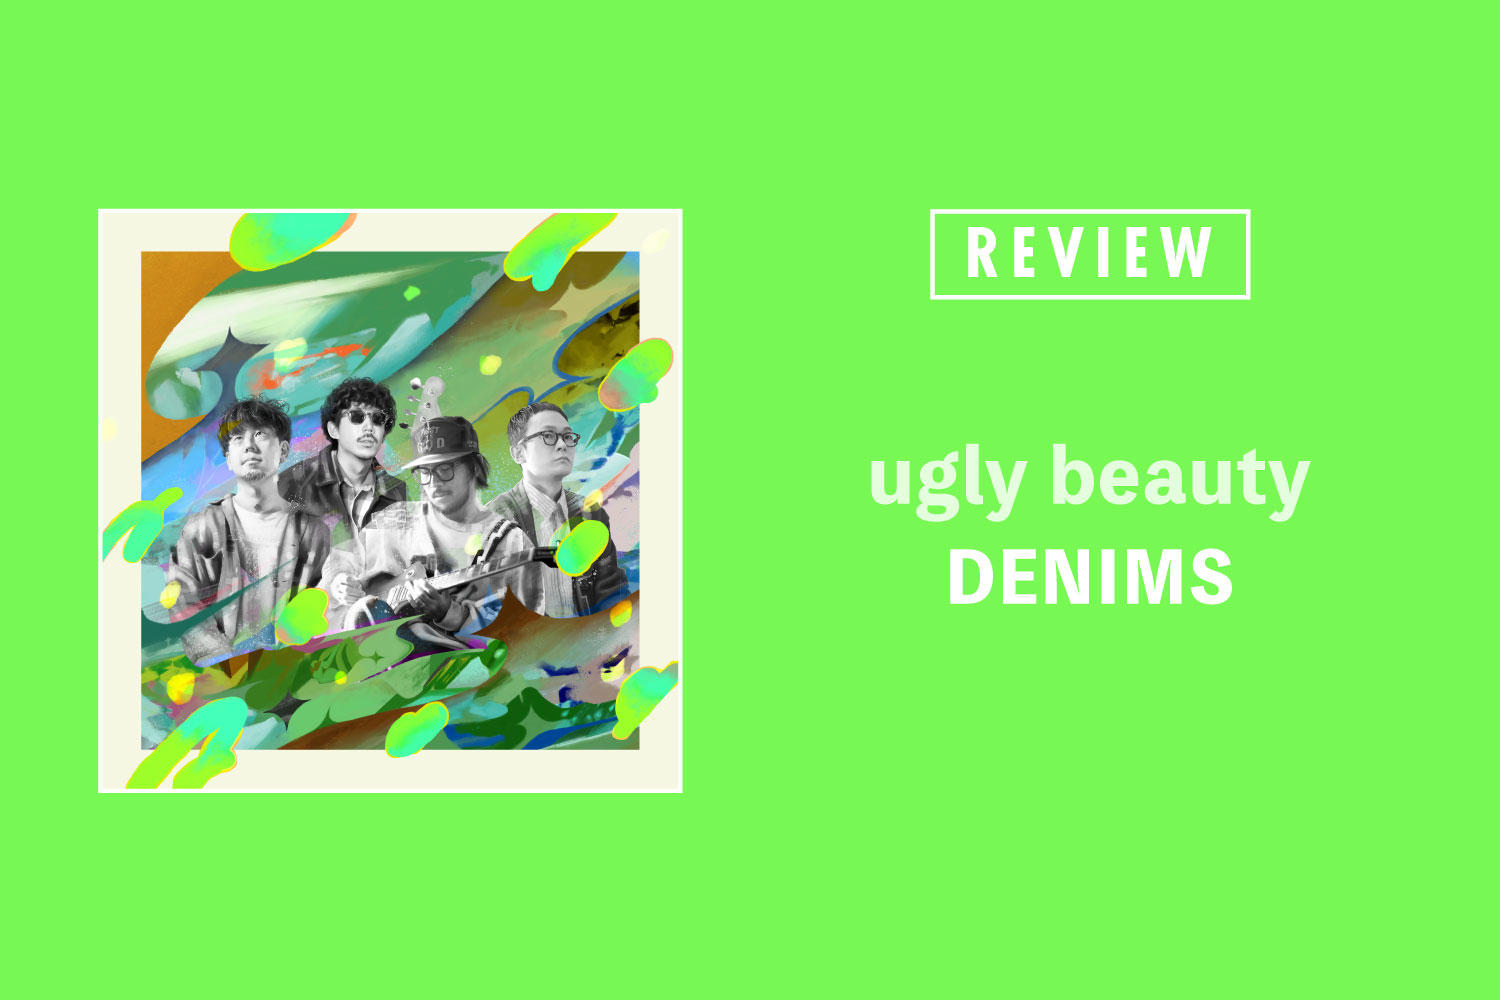 DENIMS『ugly beauty』──醜くも美しいこの世界を愛する。DENIMSが鳴らす人生賛歌